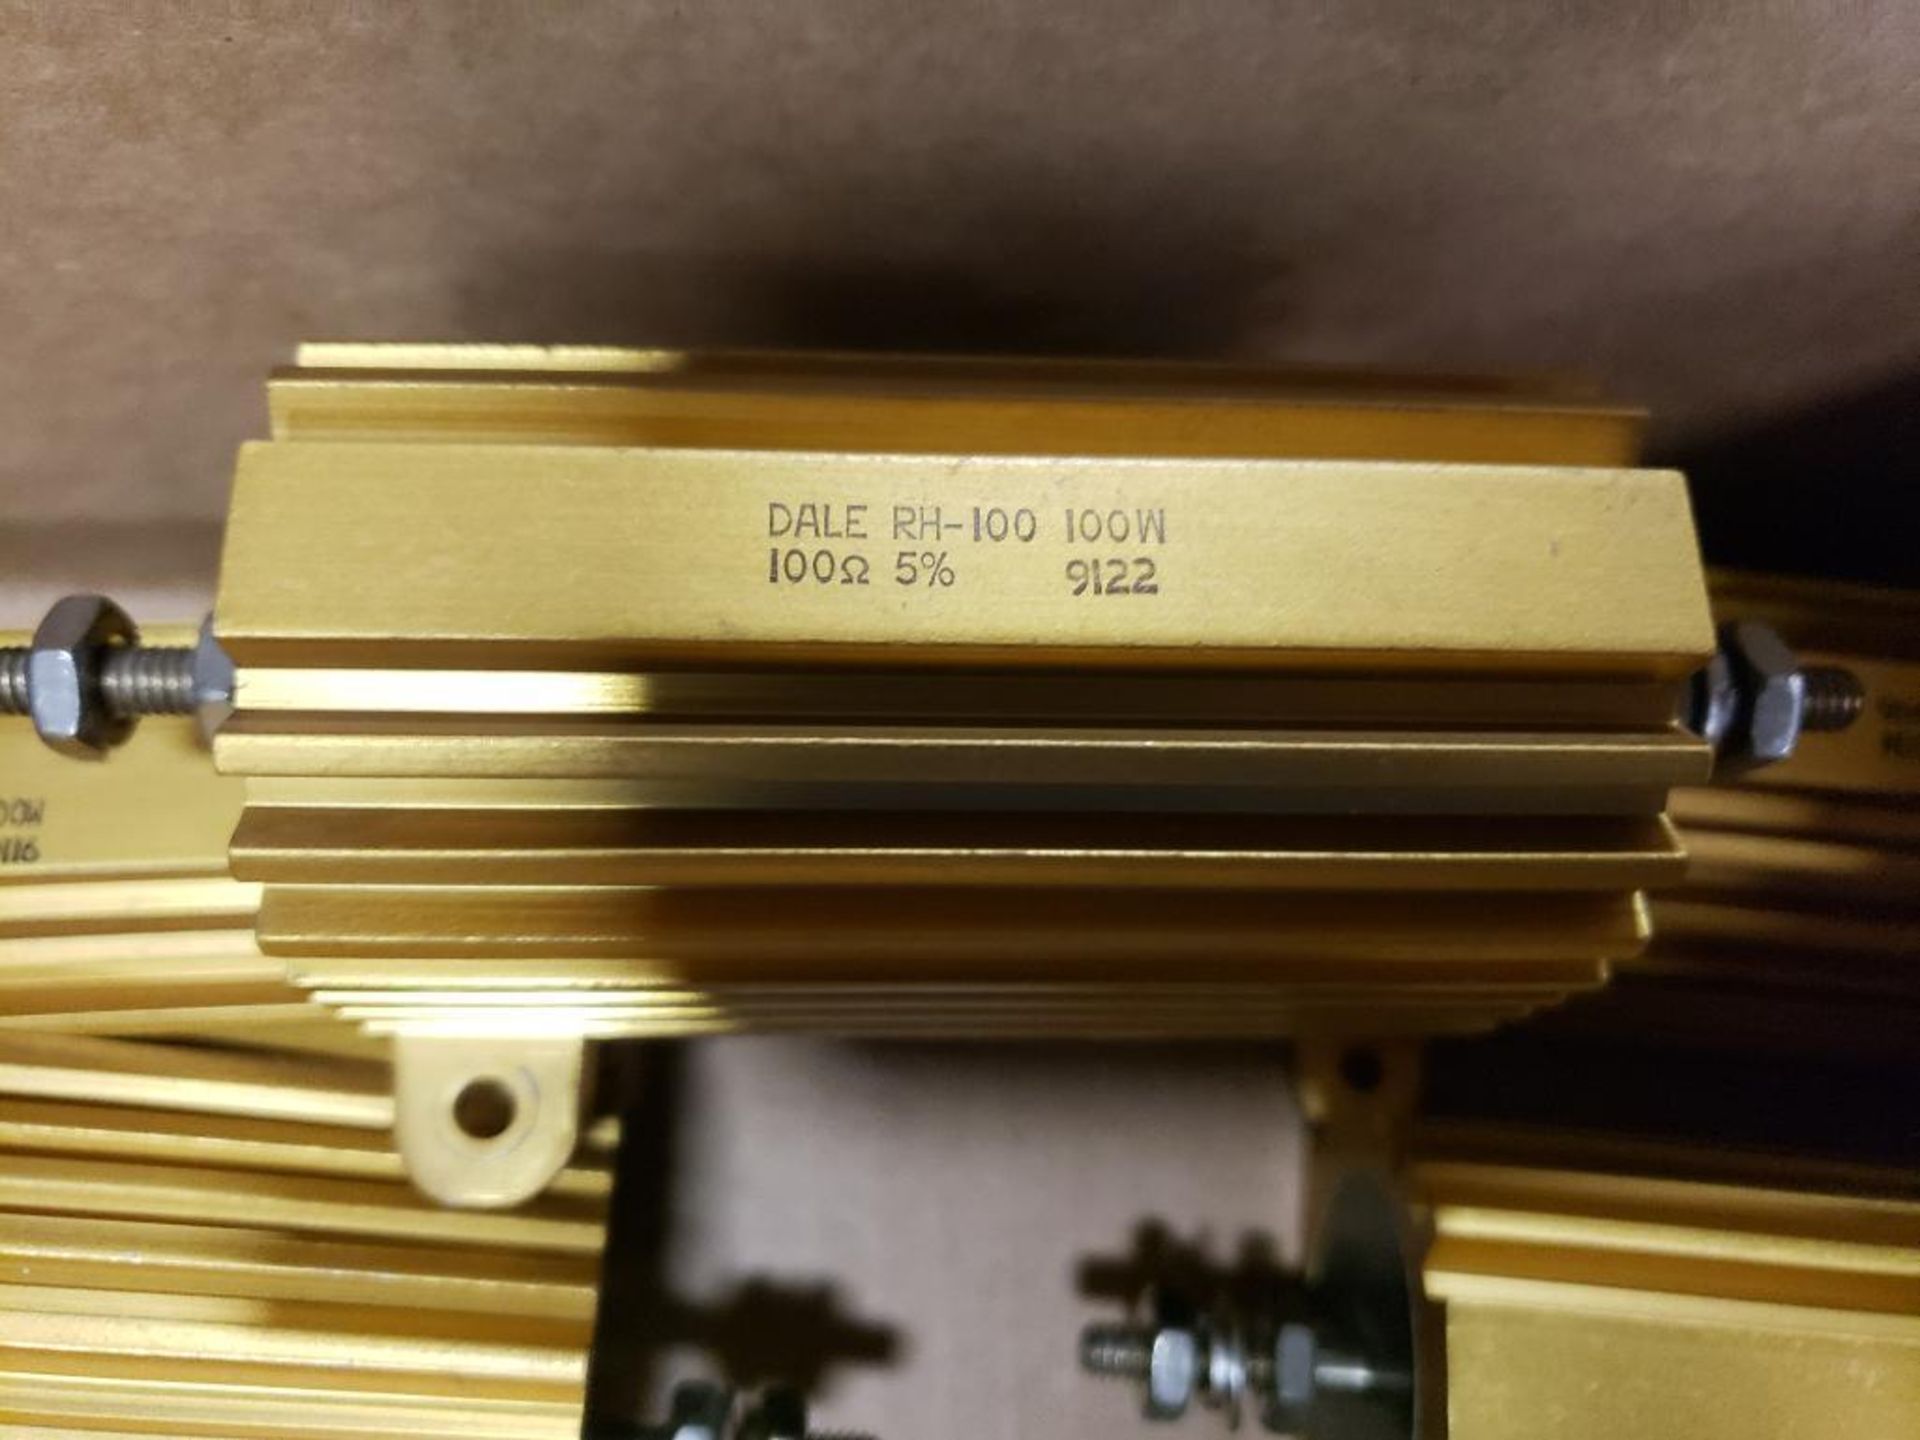 Qty 12 - Dale RH-100 resistor. 100W, 100-OHM 5%. - Image 3 of 5